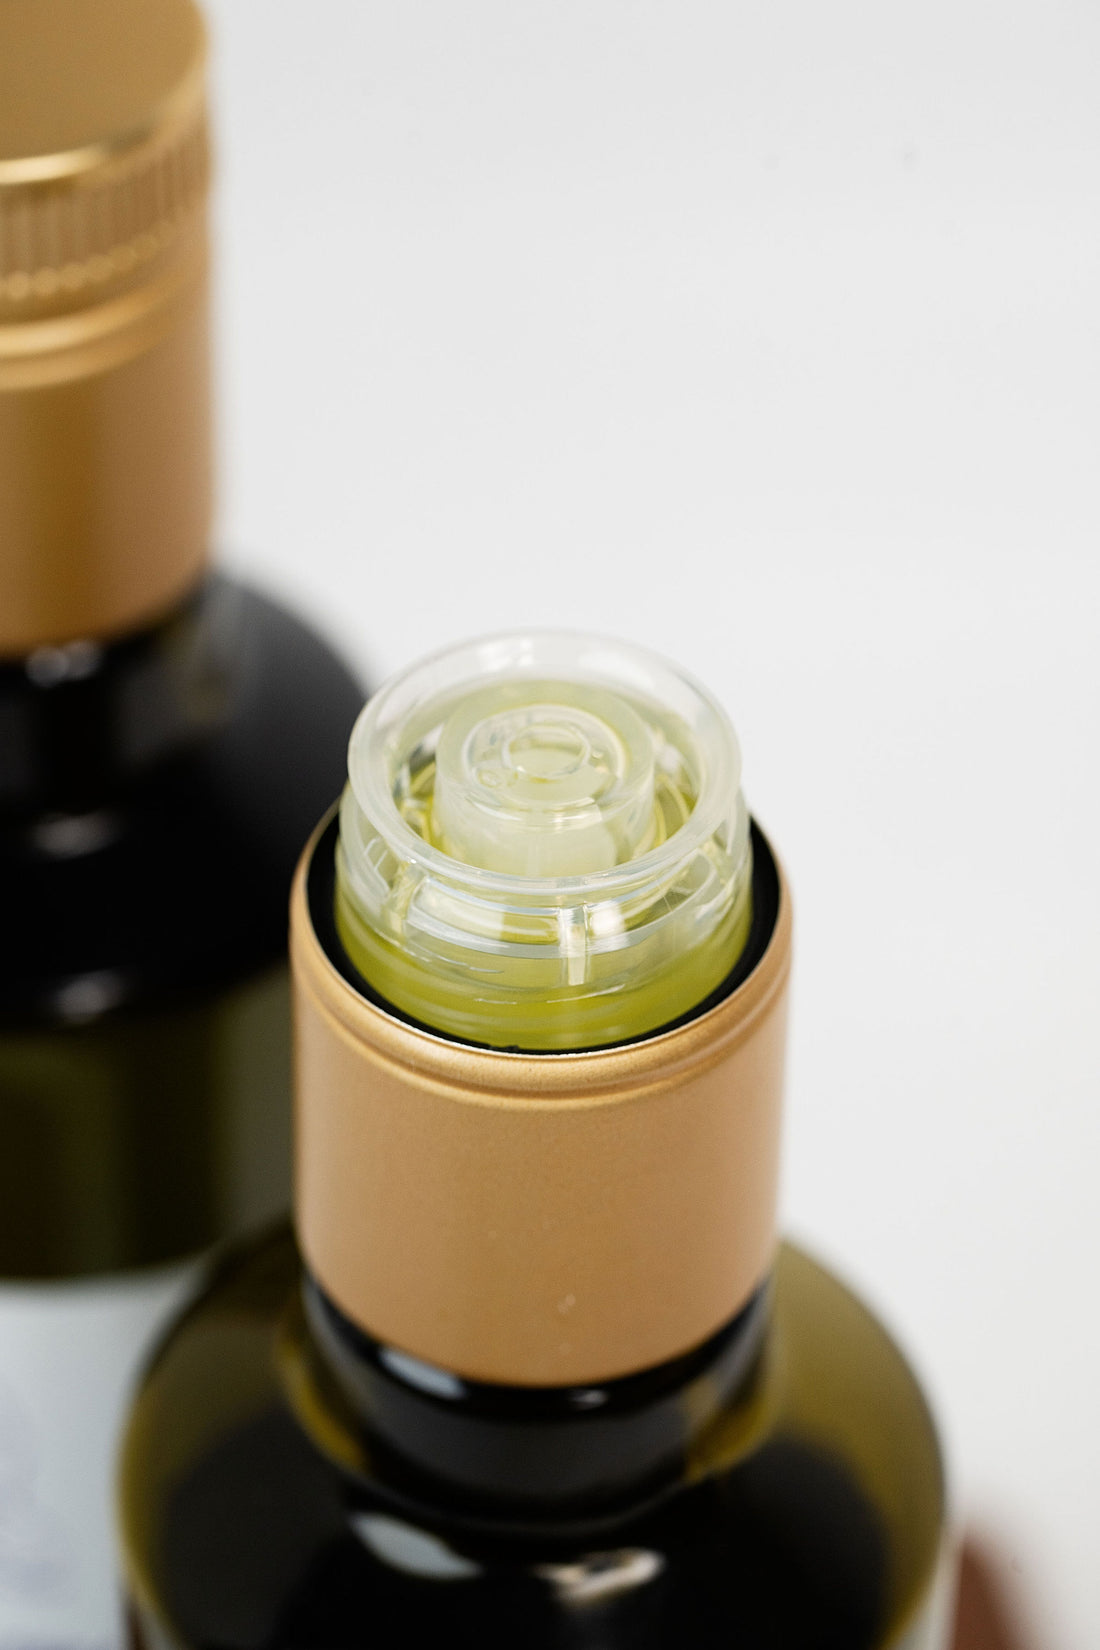 B EVOOGuy.com(R) Semone Extra Virgin Olive Oil- Premium- 100% Spanish Picual - 3 Bottles-HARVEST 2023/24 JUST ARRIVED!